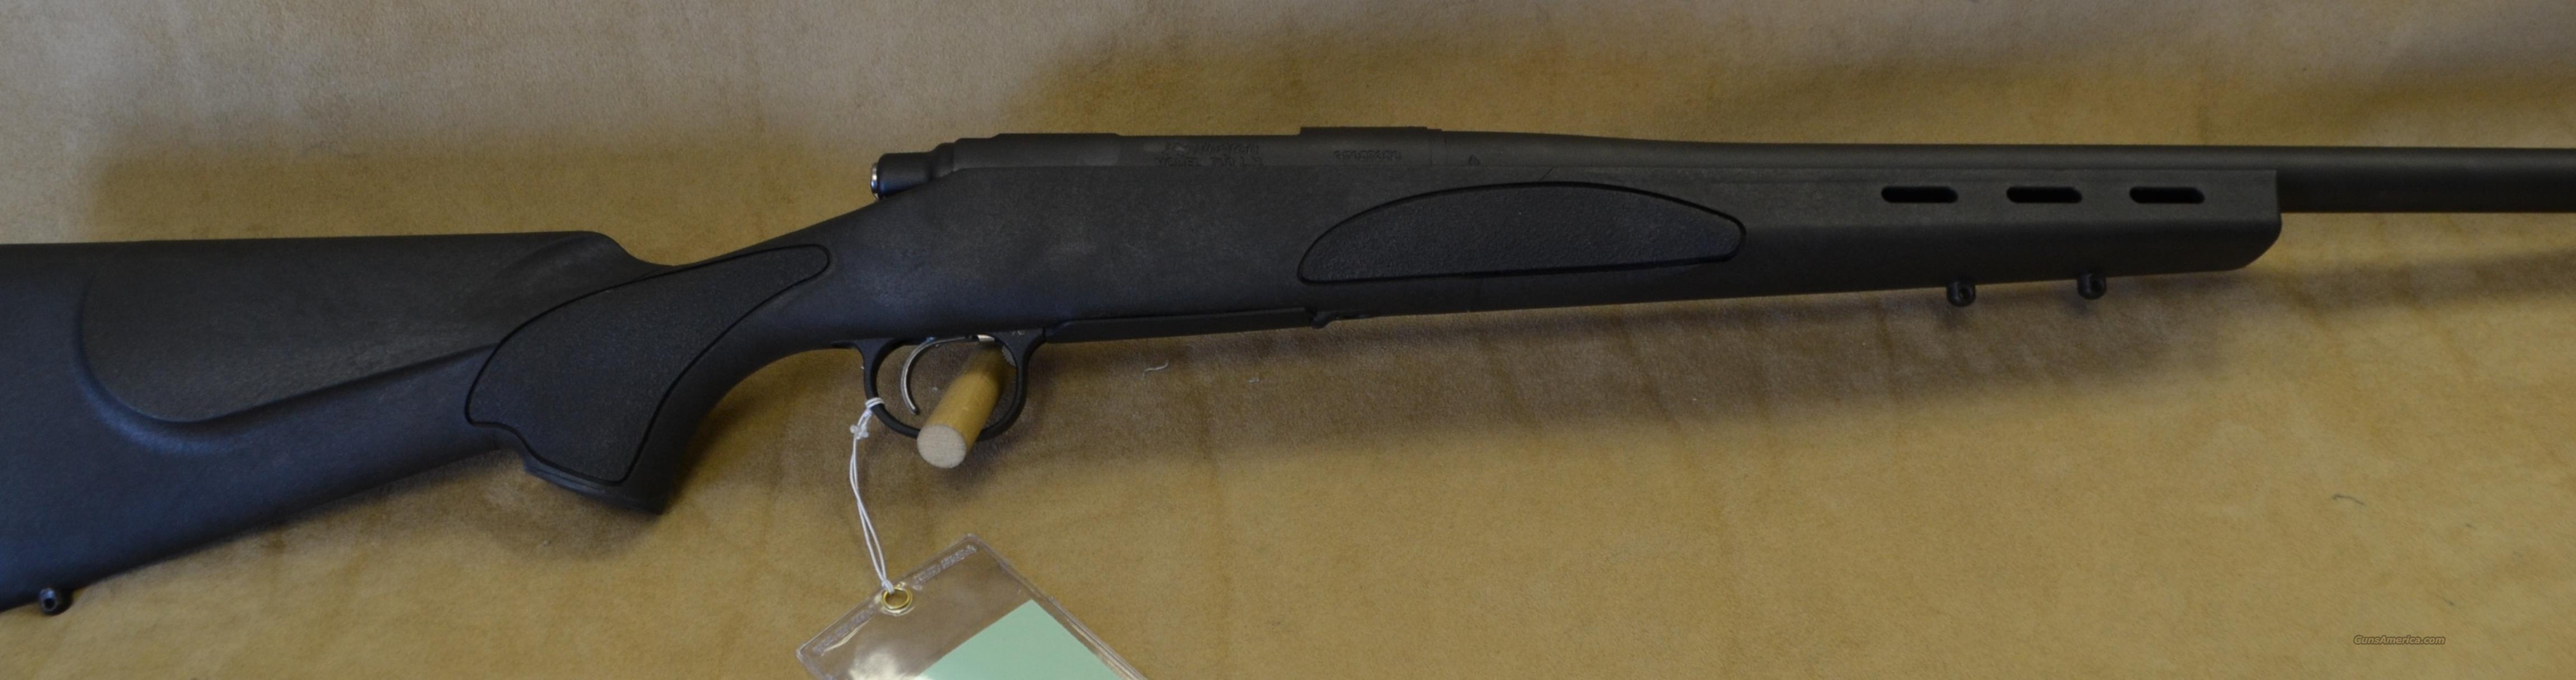 rebate-84228-remington-700-sps-varmint-lh-243-for-sale